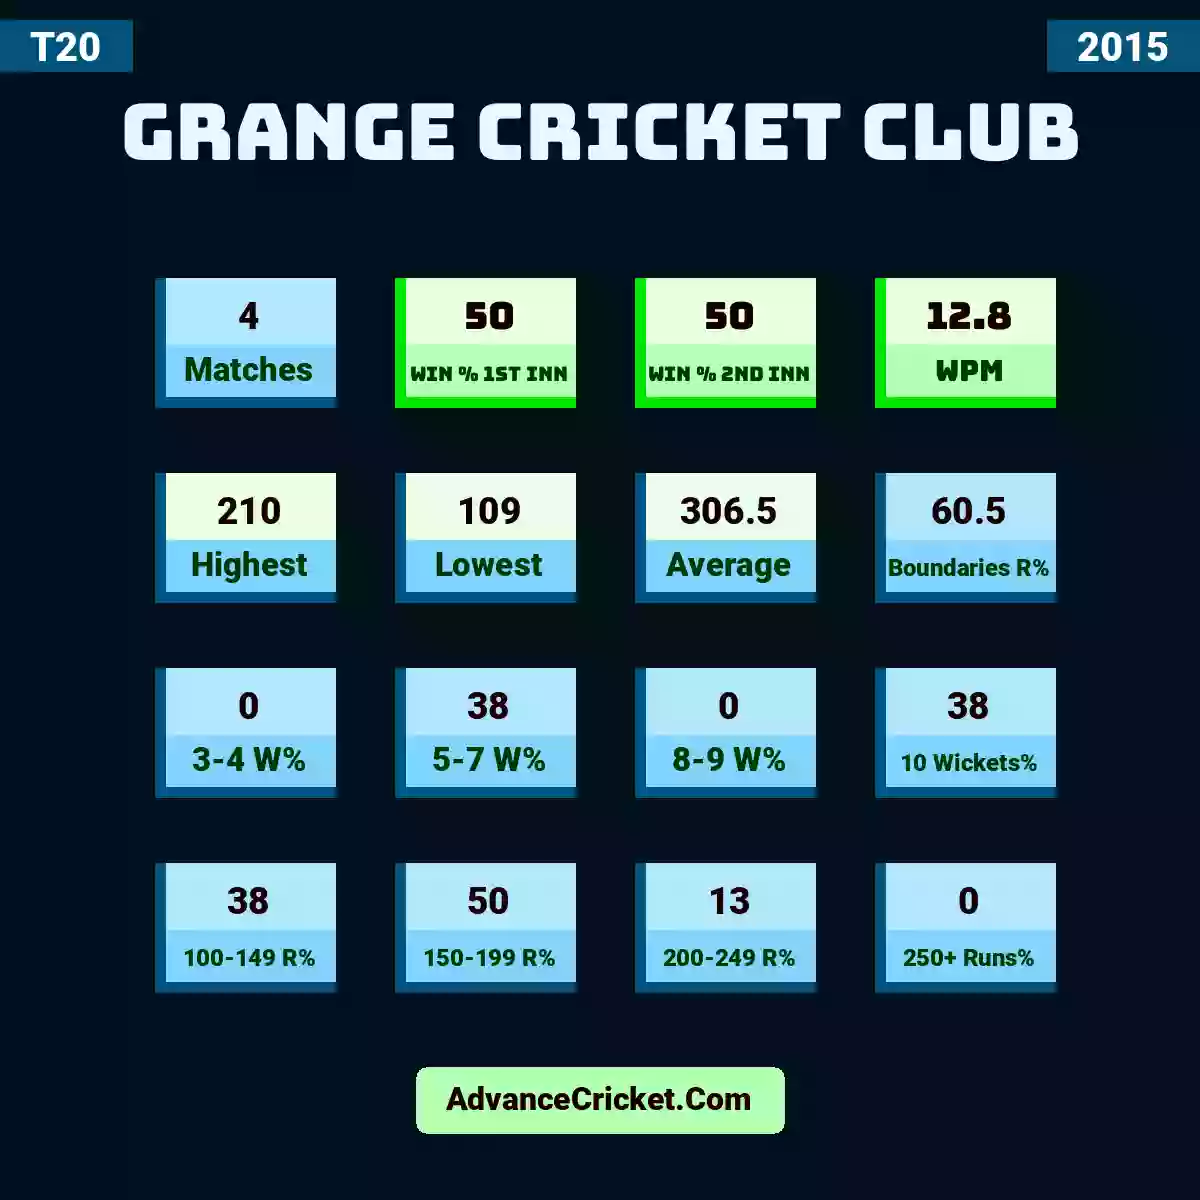 Image showing Grange Cricket Club with Matches: 4, Win % 1st Inn: 50, Win % 2nd Inn: 50, WPM: 12.8, Highest: 210, Lowest: 109, Average: 306.5, Boundaries R%: 60.5, 3-4 W%: 0, 5-7 W%: 38, 8-9 W%: 0, 10 Wickets%: 38, 100-149 R%: 38, 150-199 R%: 50, 200-249 R%: 13, 250+ Runs%: 0.